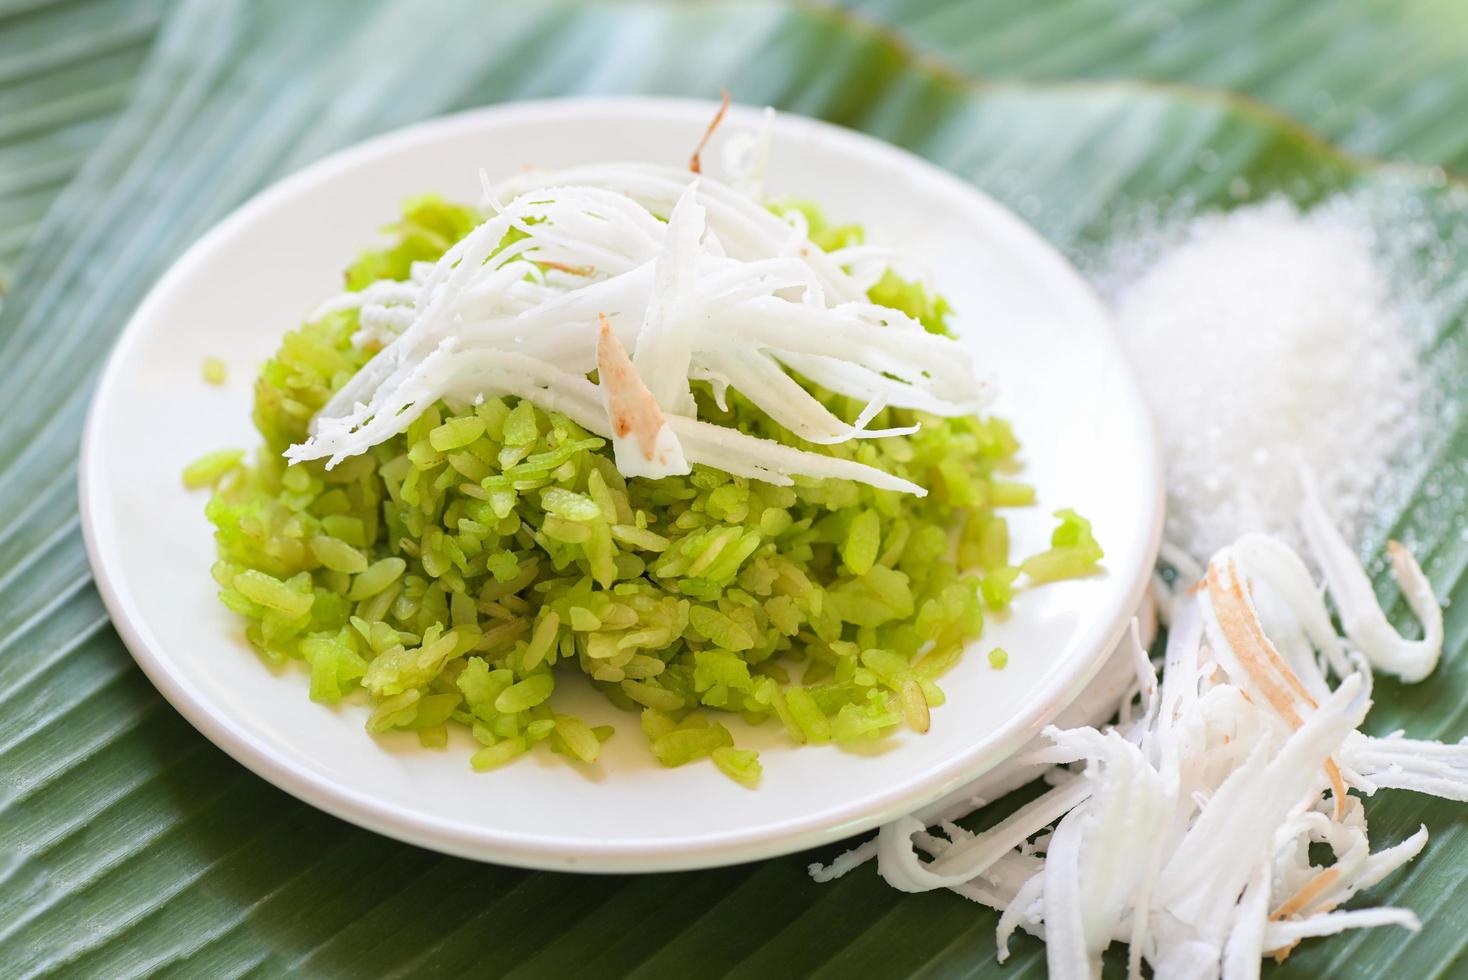 sobremesa tailandesa - comida de arroz verde triturada flocos de arroz cereal com coco e açúcar, arroz verde doce com espigas de arroz folha de pandan, sobremesa de comida ou lanches foto